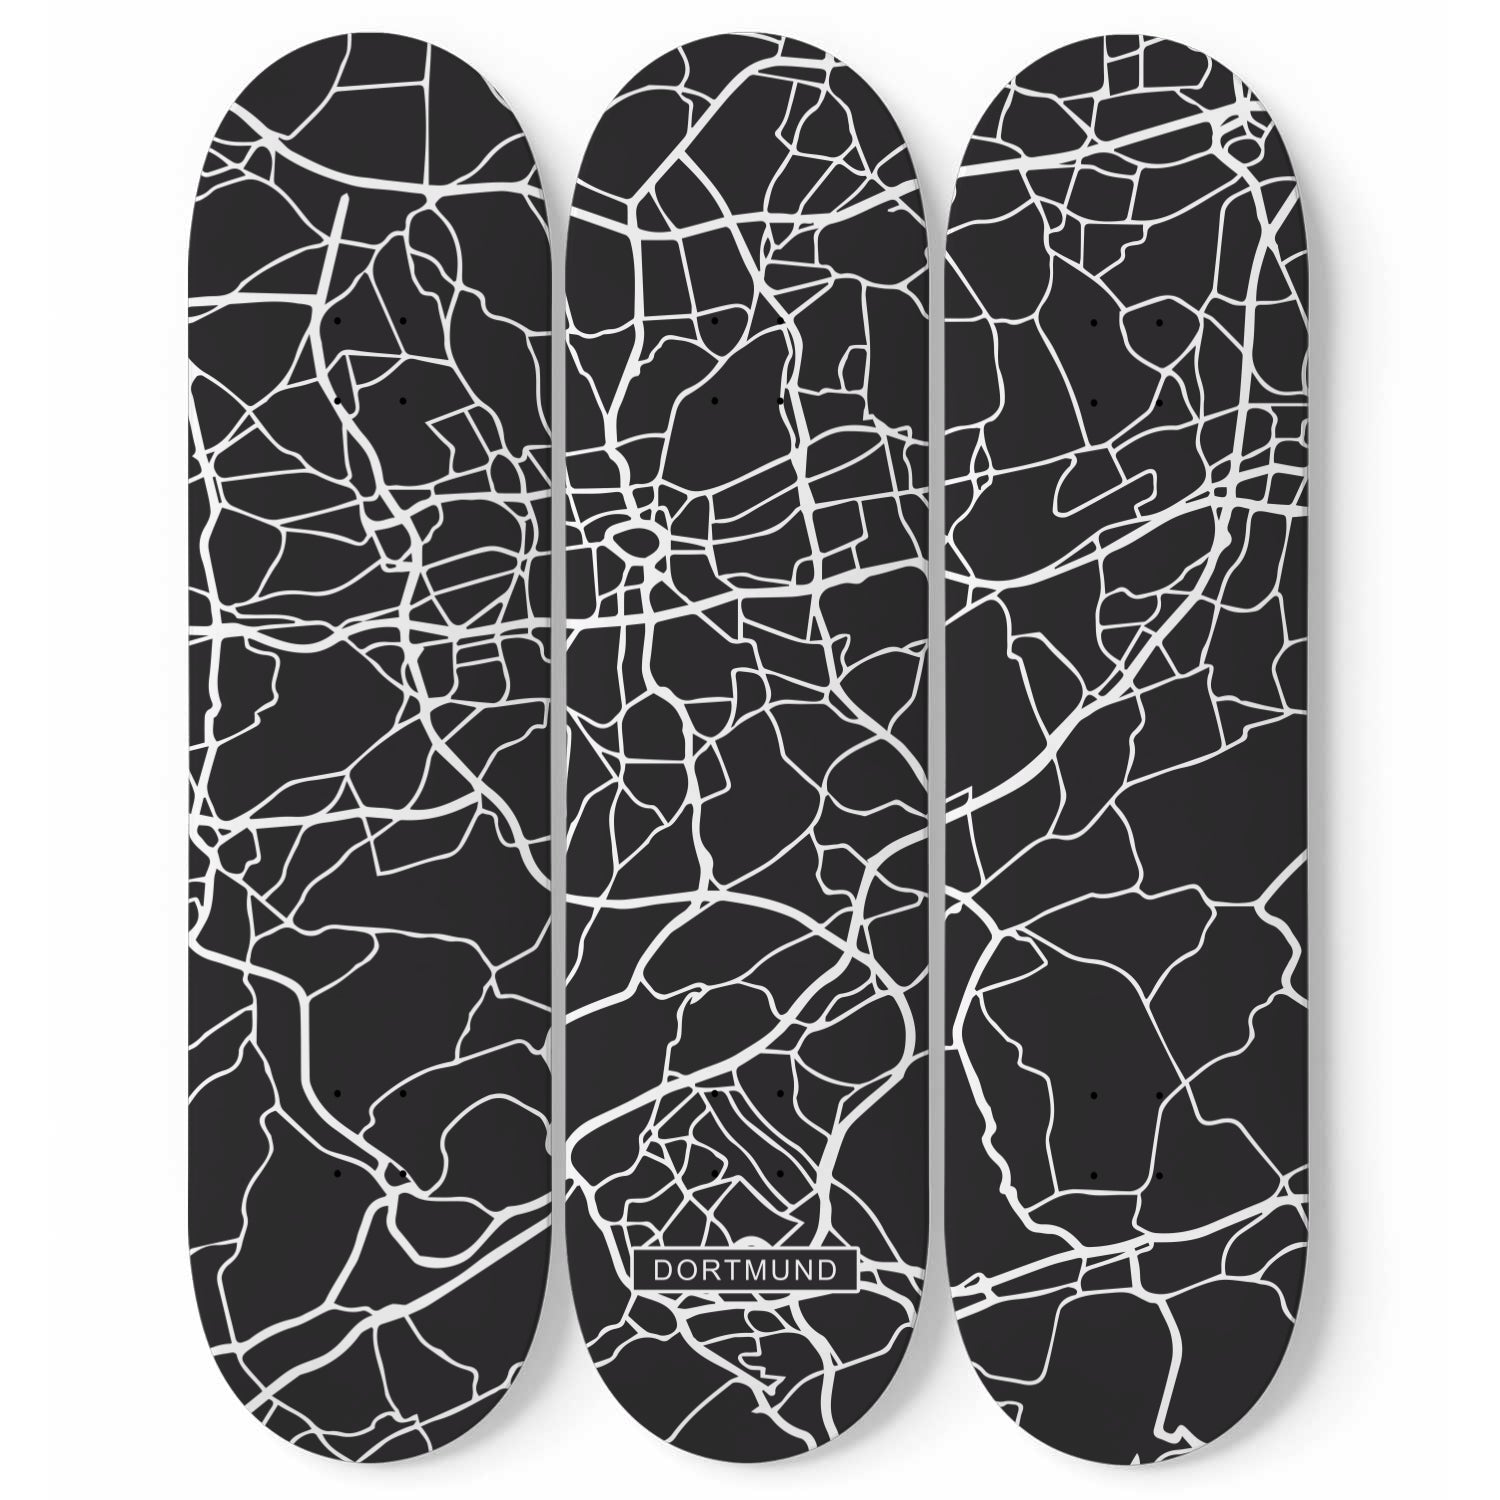 City Maps Dortmund (GER) - Skater Wall